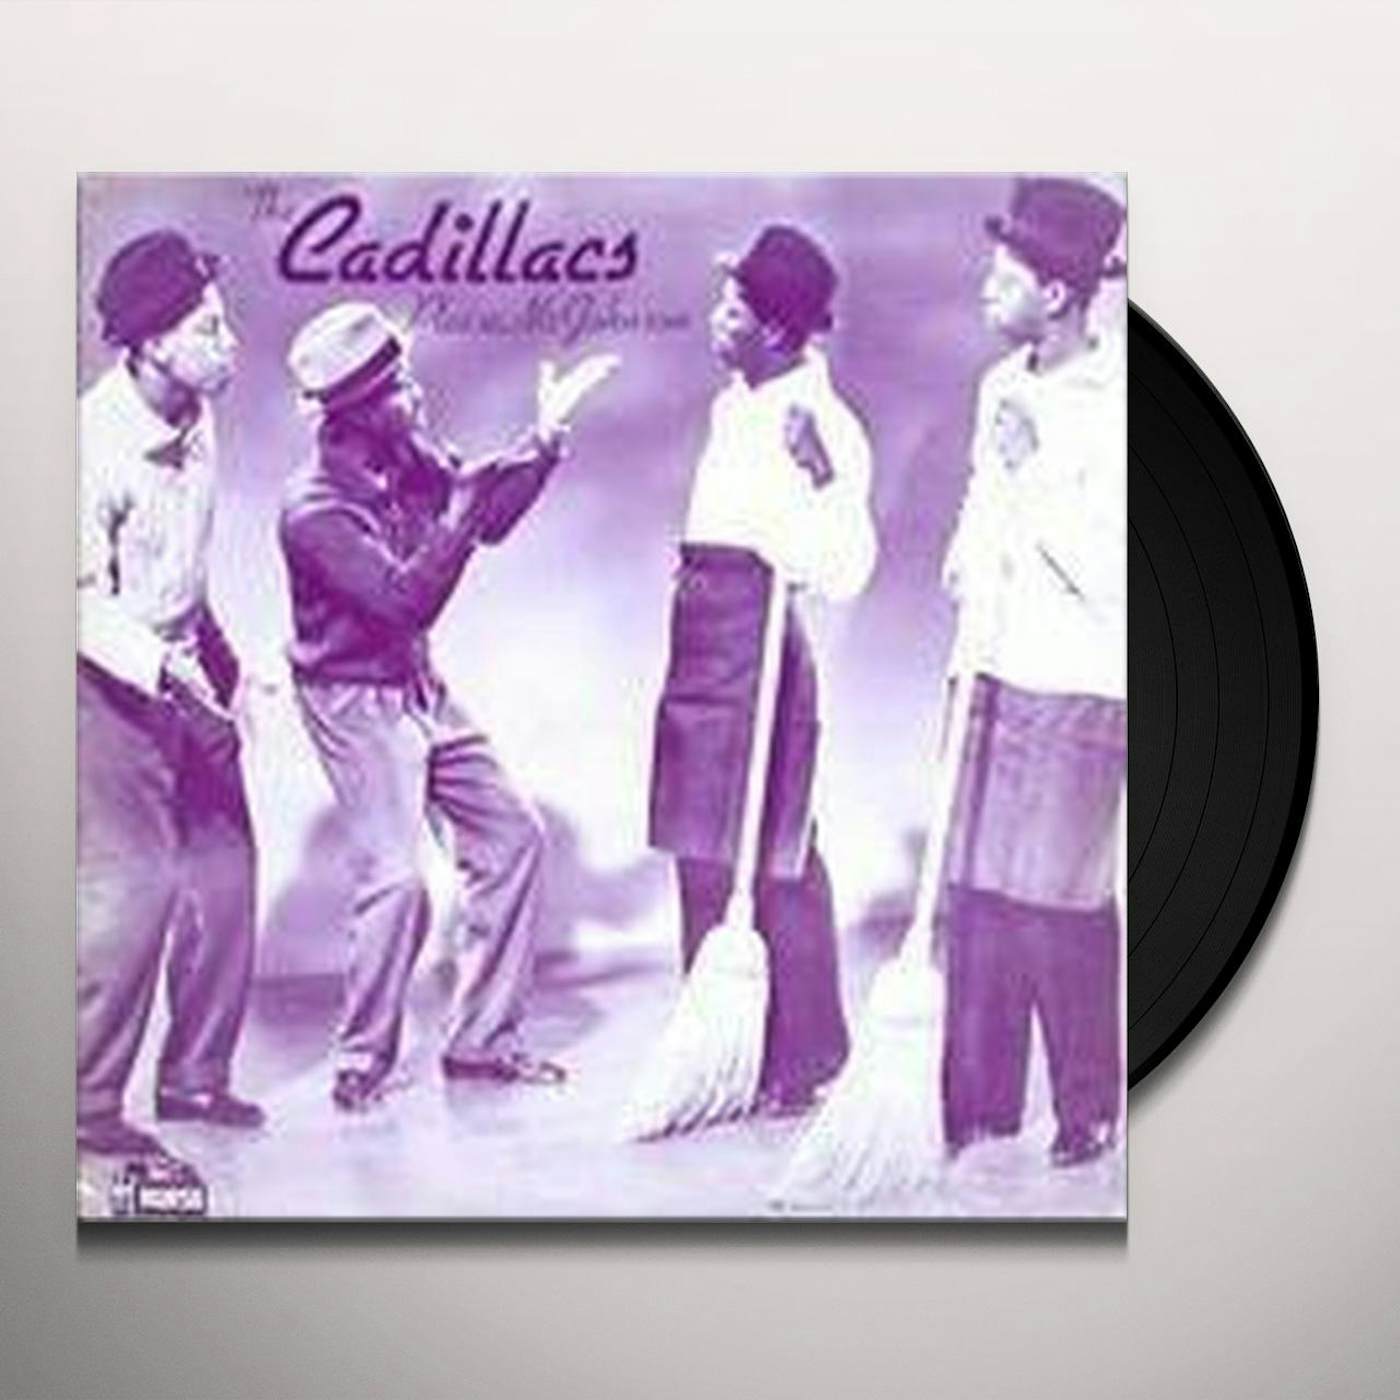 Cadillacs PLEASE MR JOHNSON Vinyl Record